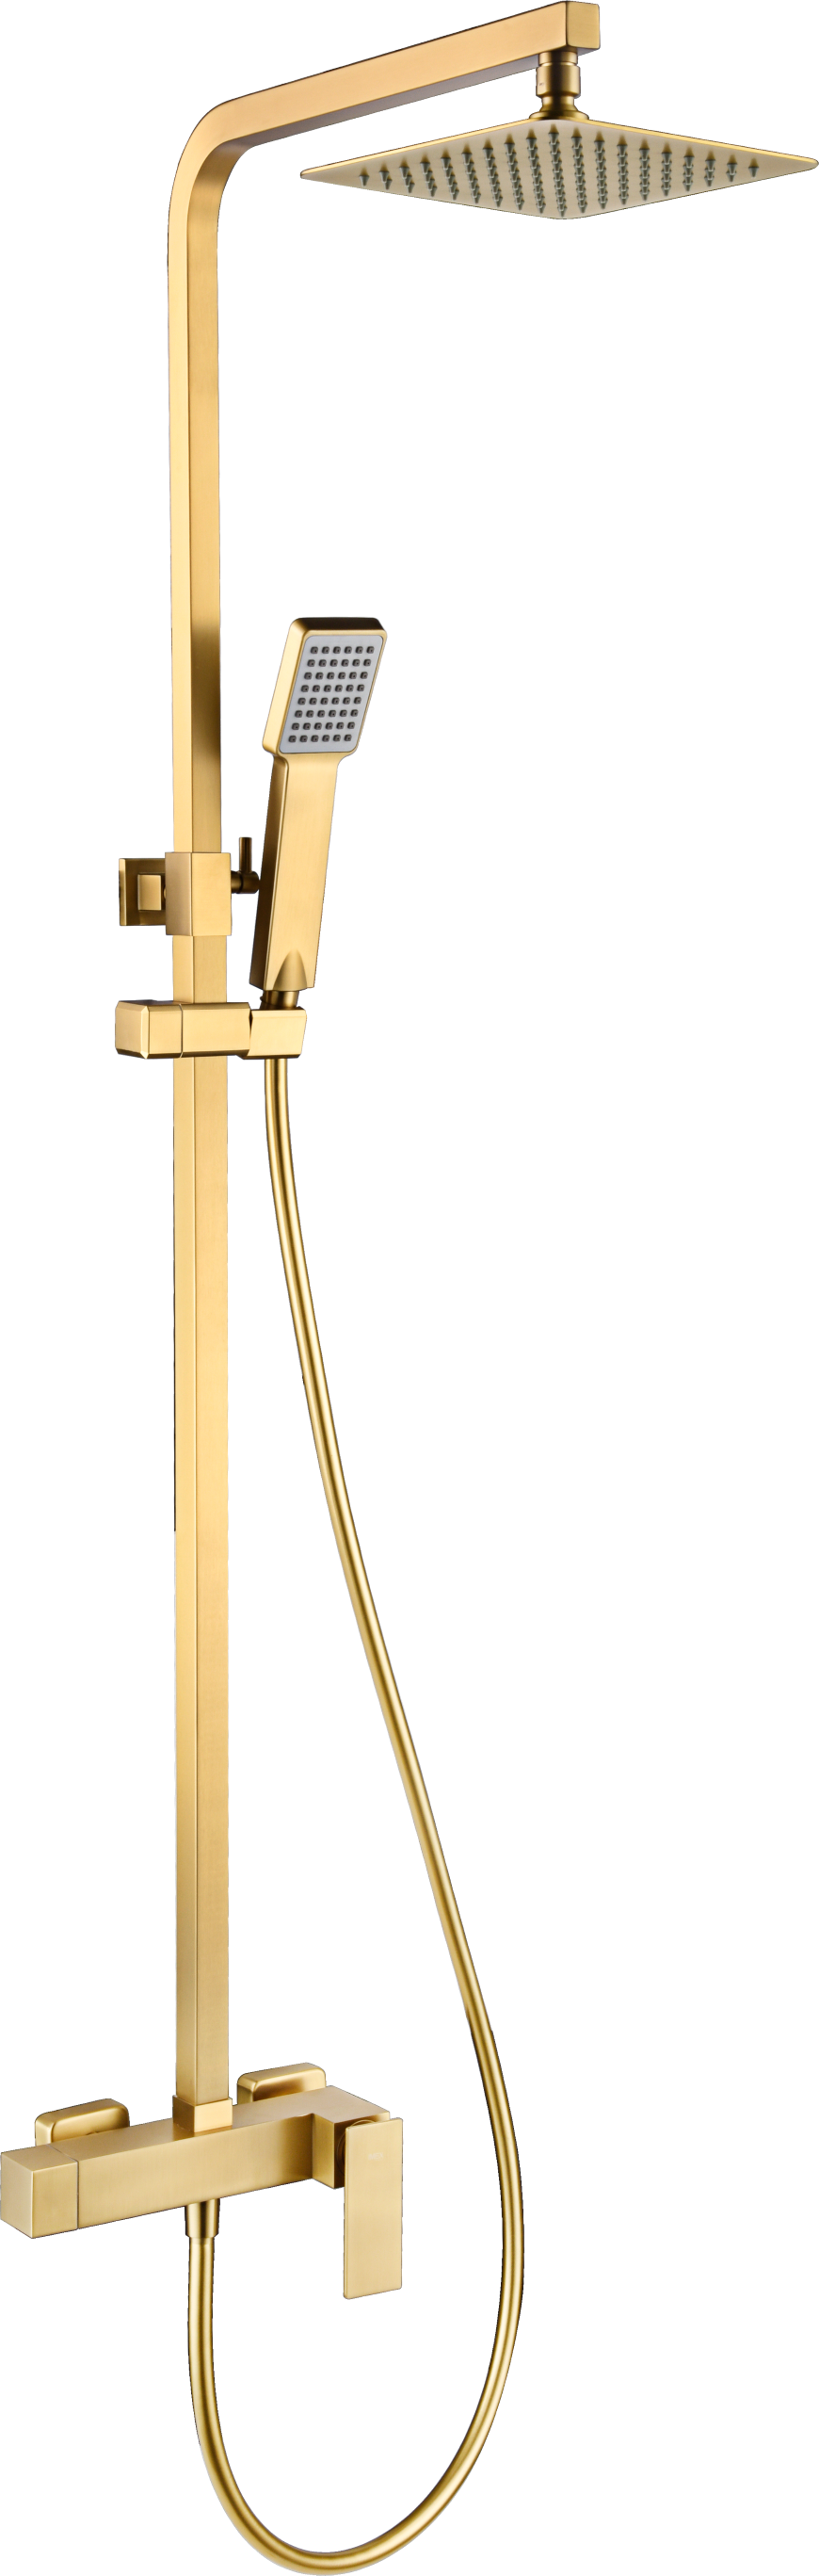 Columna de ducha oro cepillado PISA de Imex